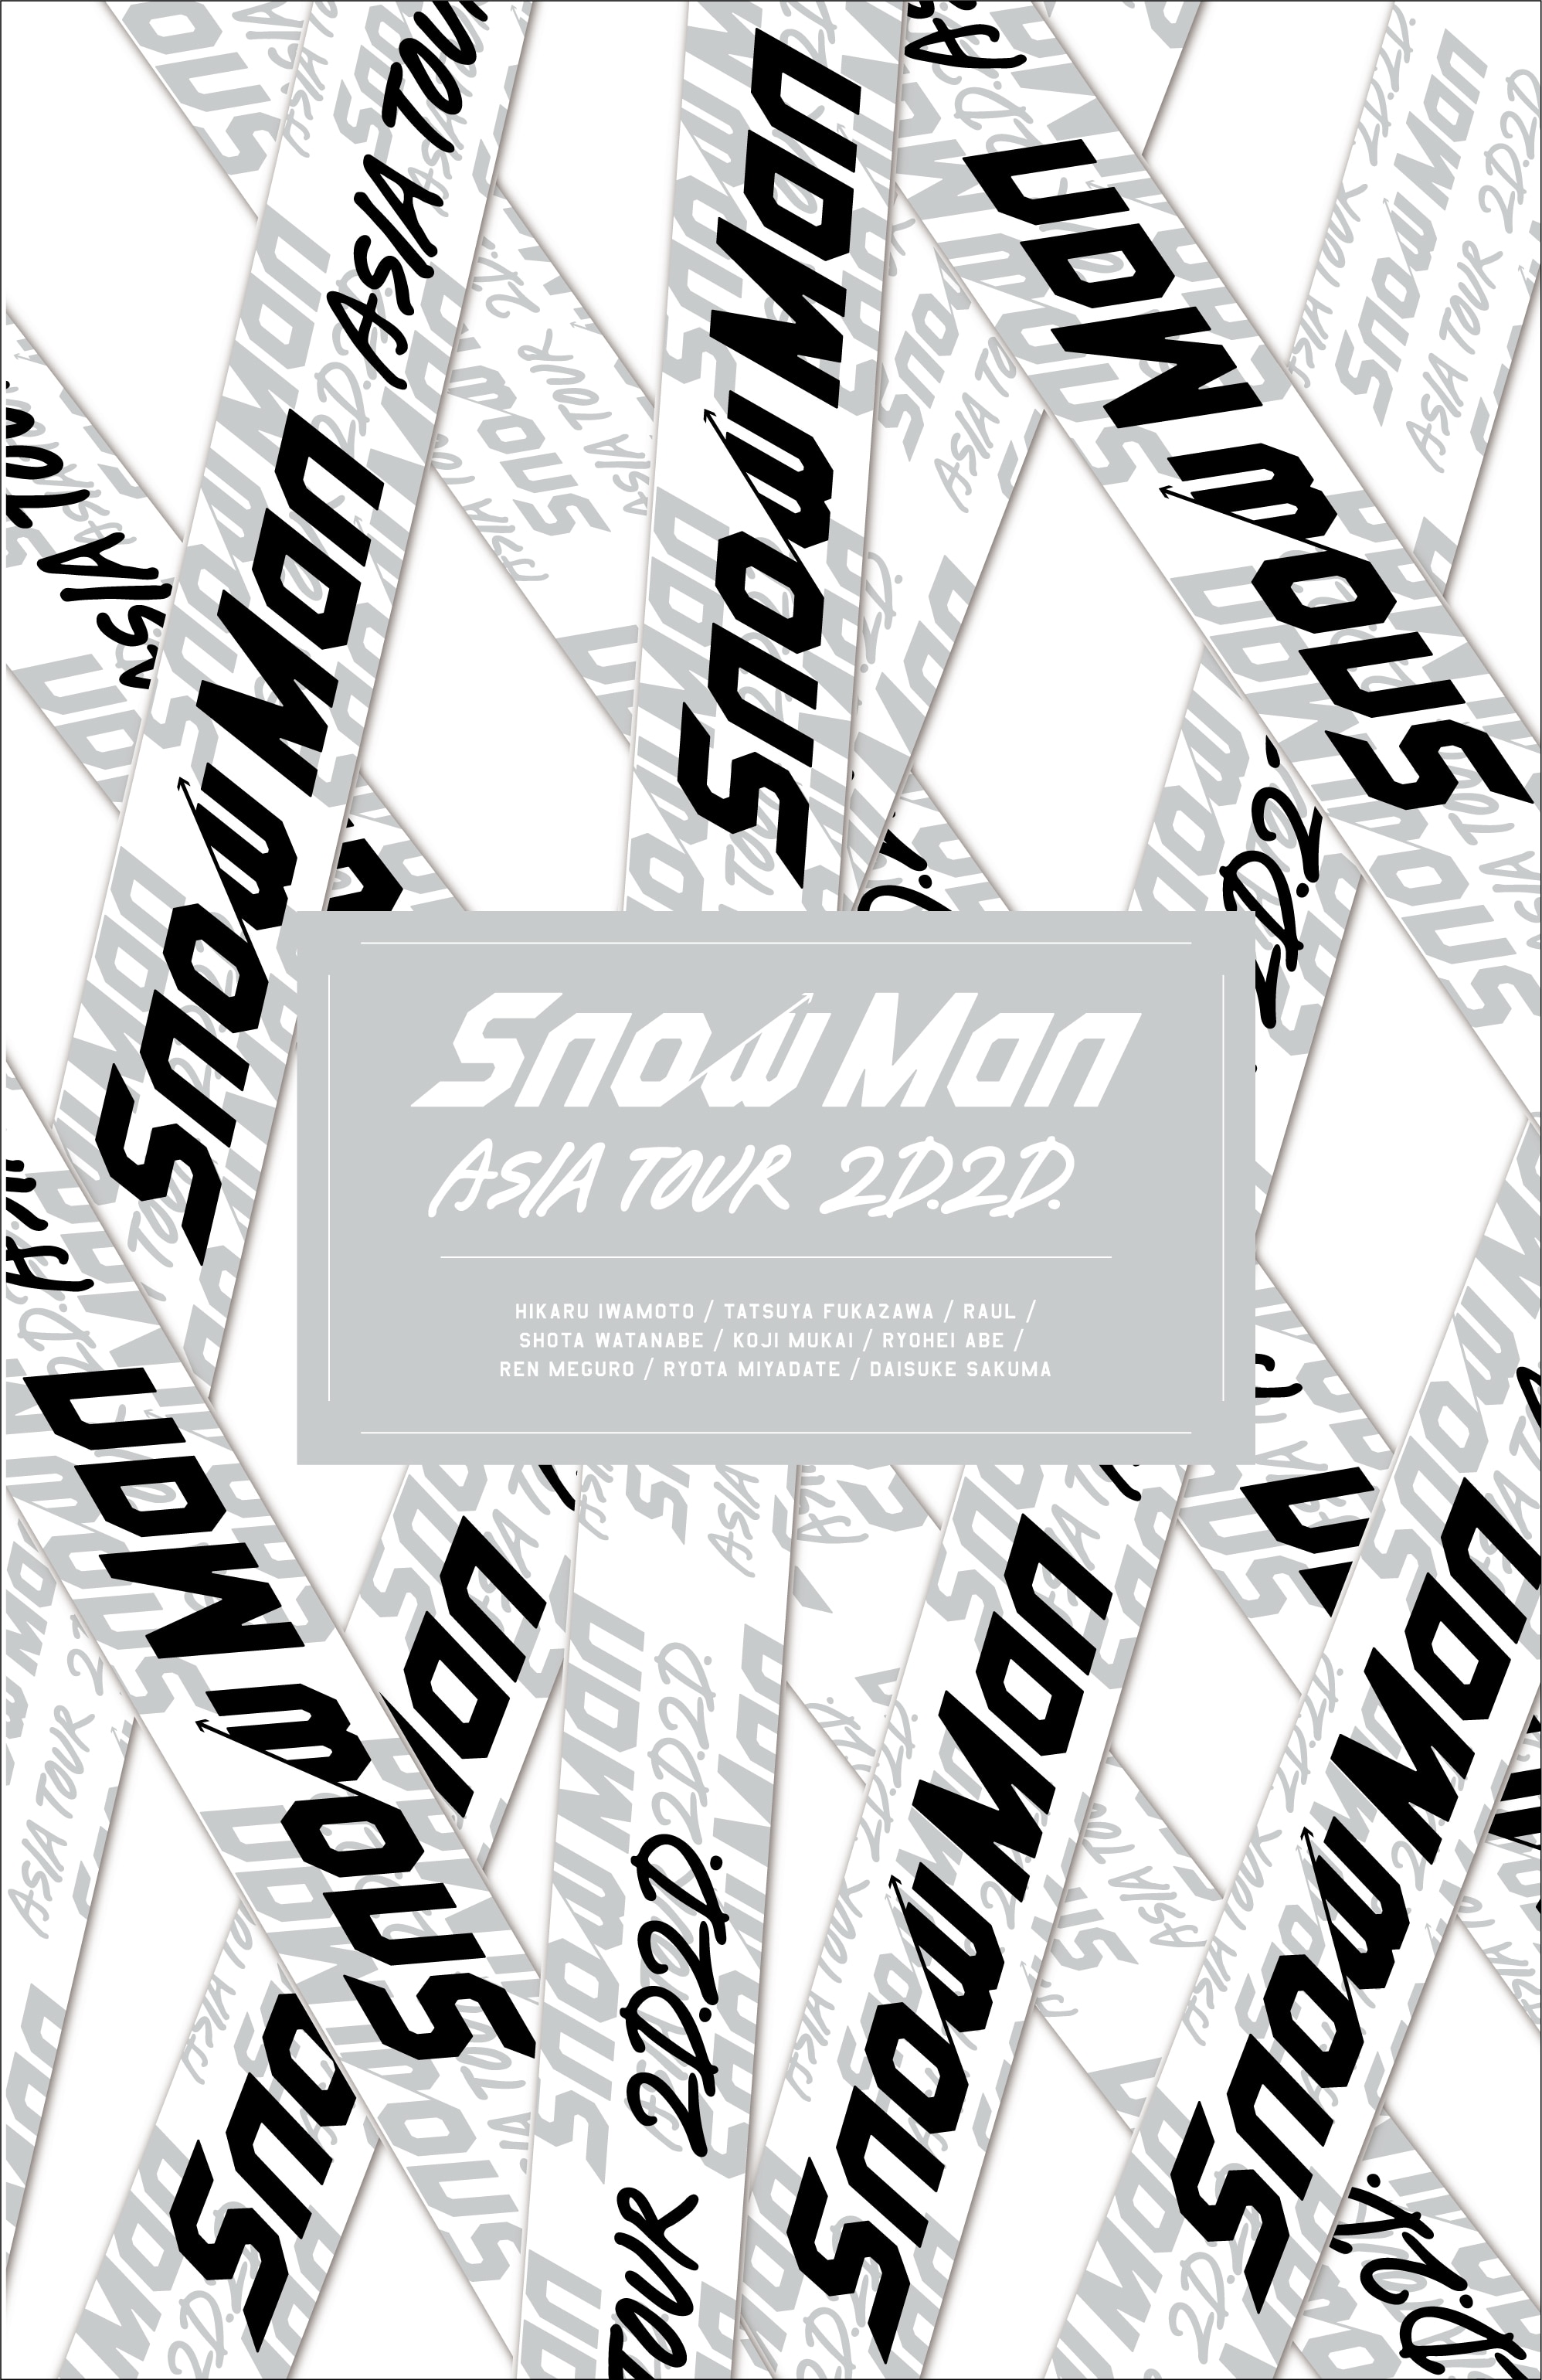 SnowMan 2D.2D. 初回盤 DVD | www.hartwellspremium.com